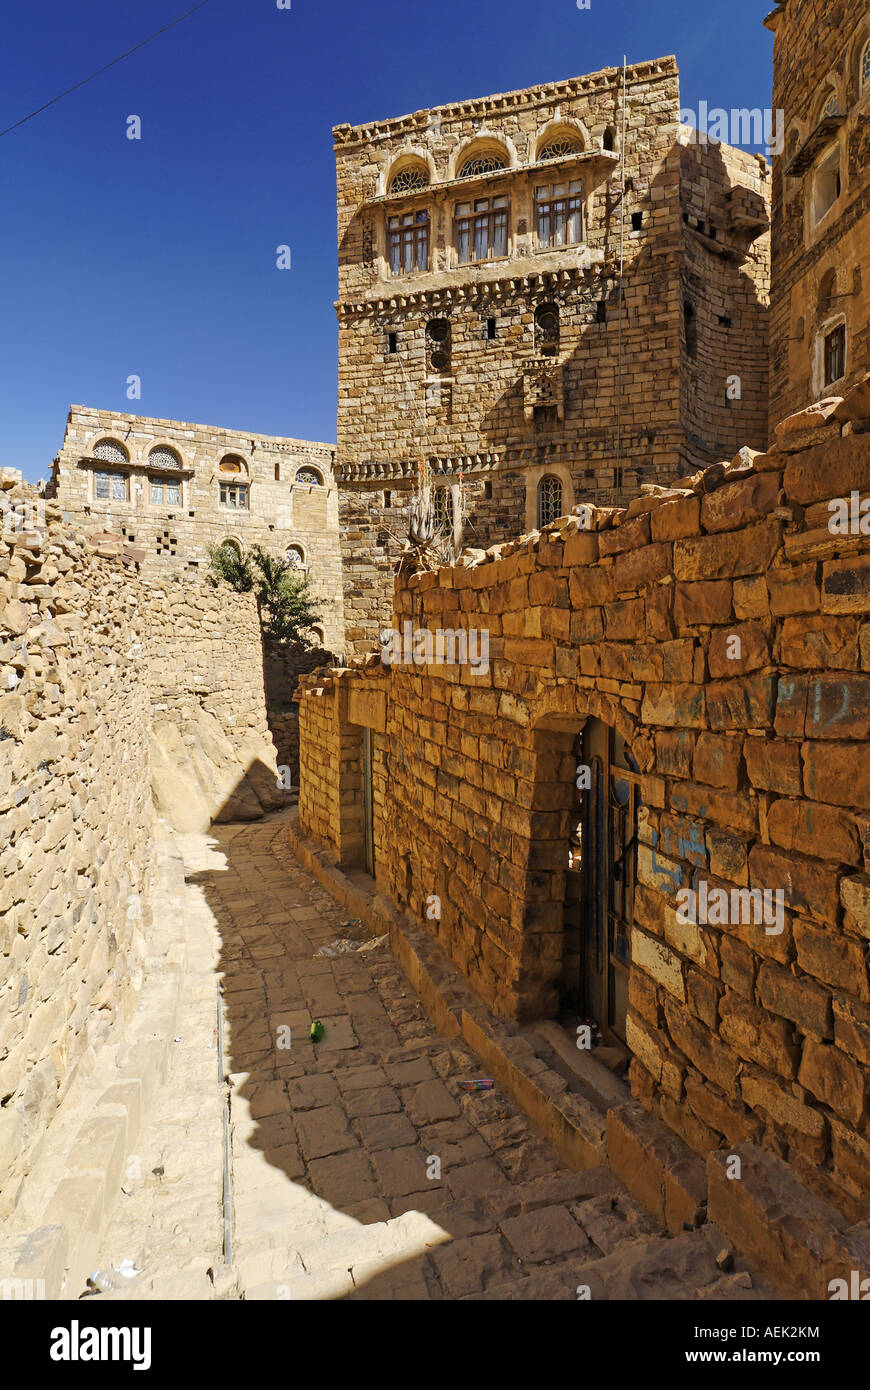 Old town of Thula, Yemen Stock Photo